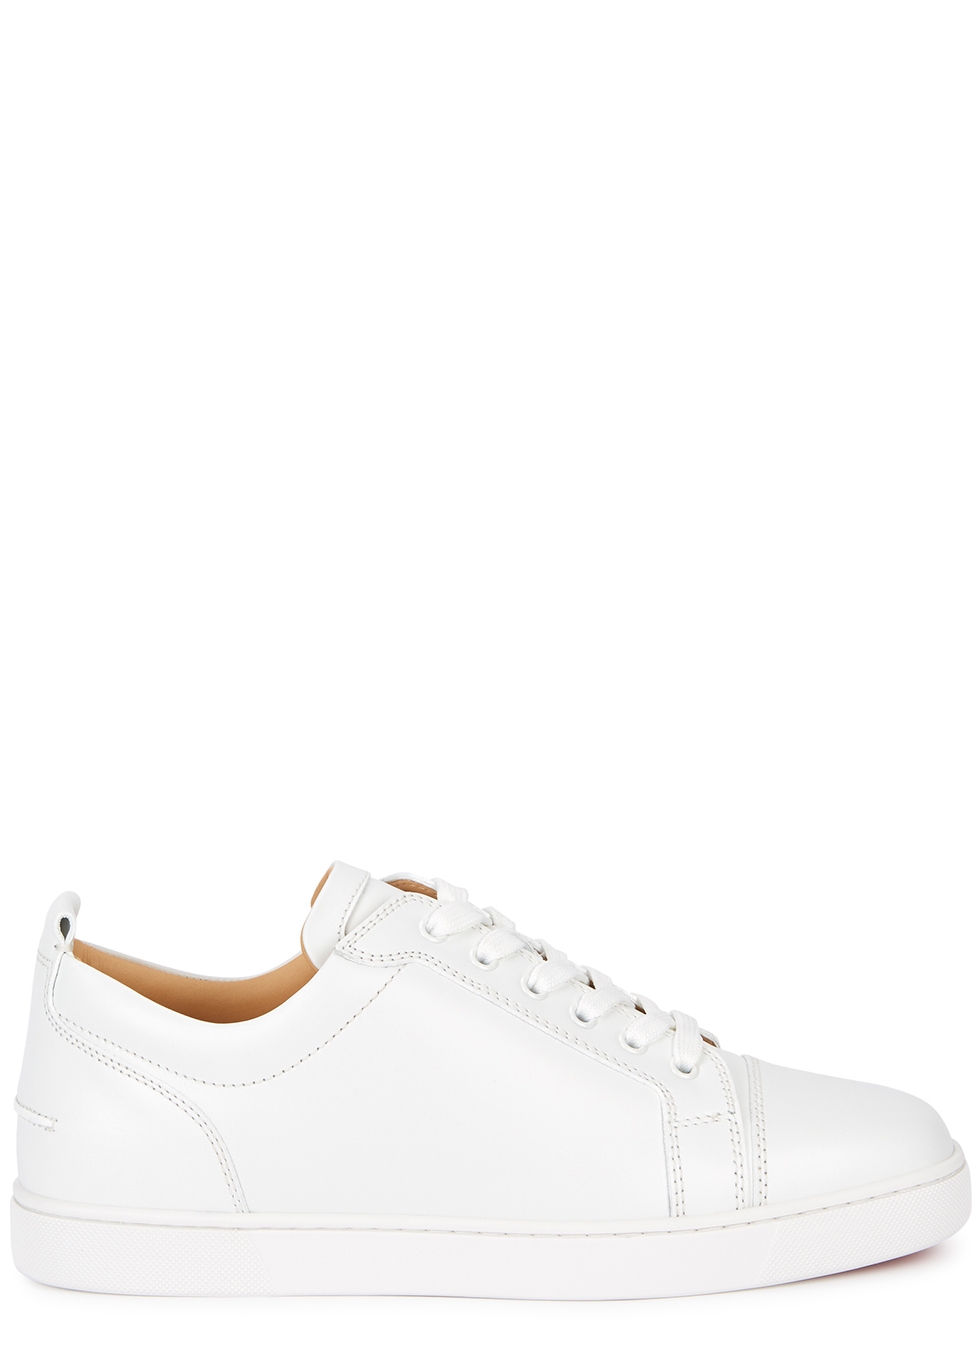 Christian Louboutin Louis Junior white leather sneakers - Harvey Nichols